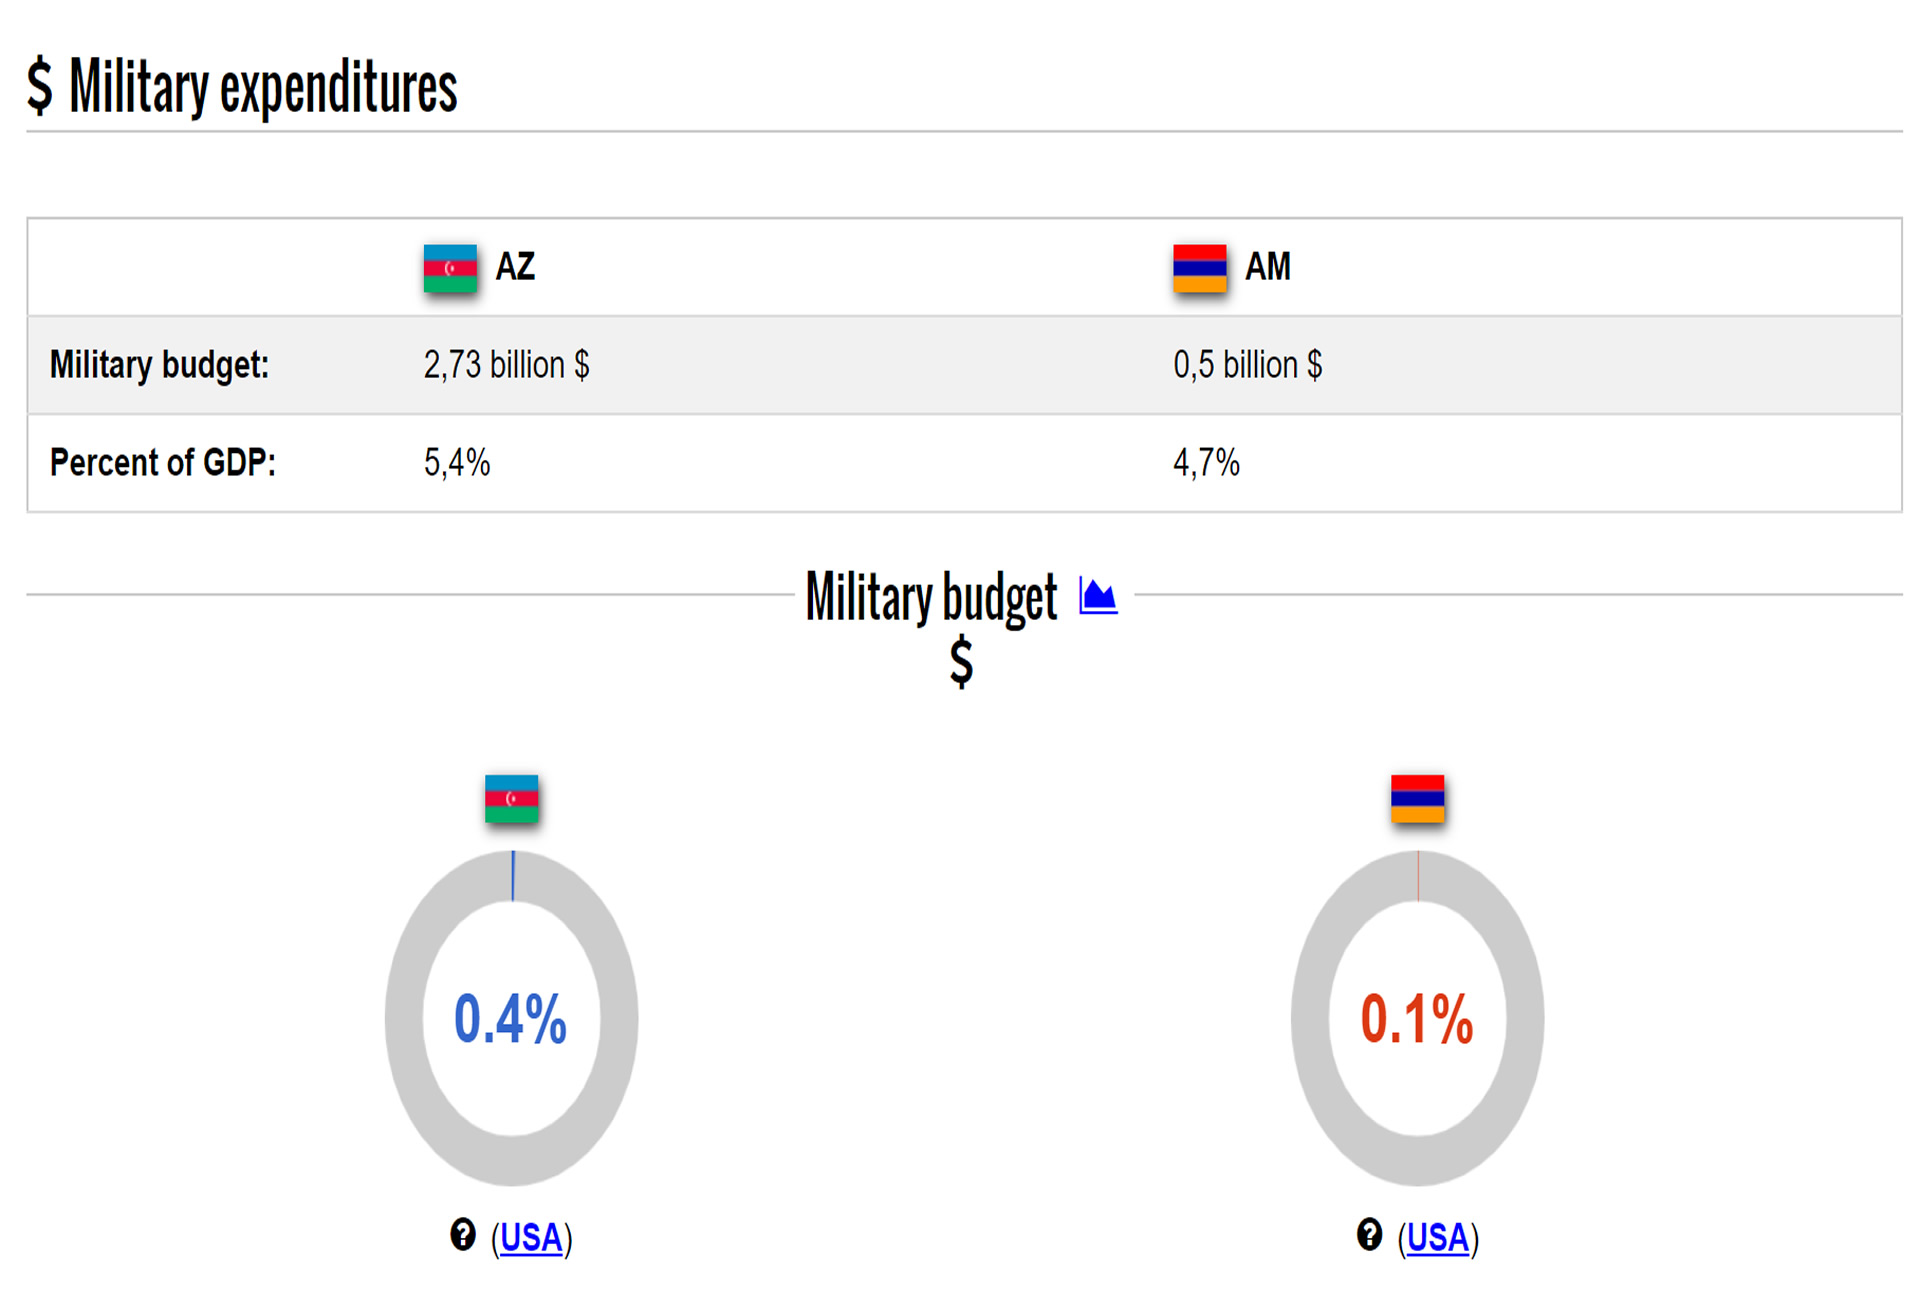 Armenia vs Azerbaijan Military Expenditures